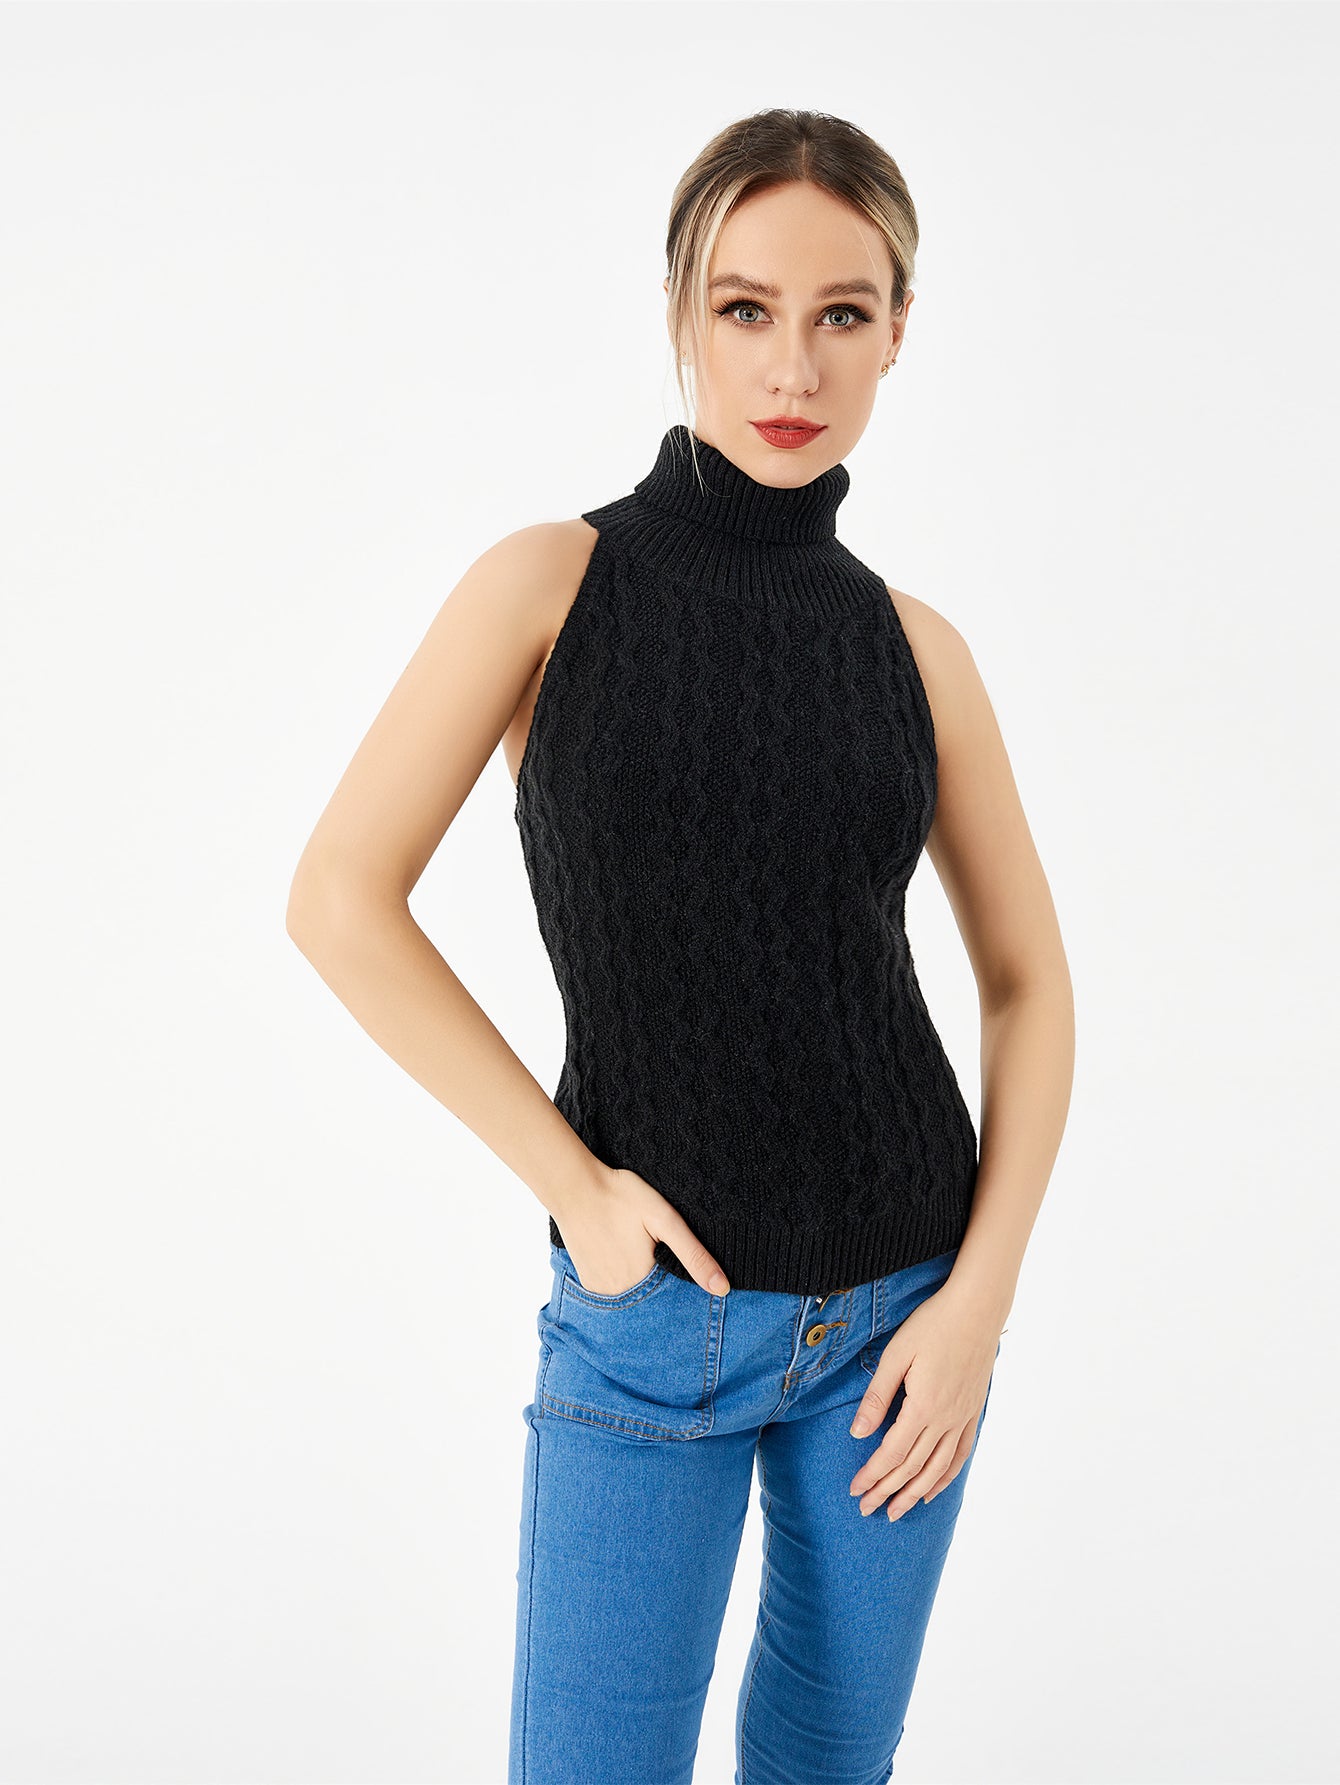 Embrace Cozy Elegance: Women's Stretch Casual Turtleneck Sweater